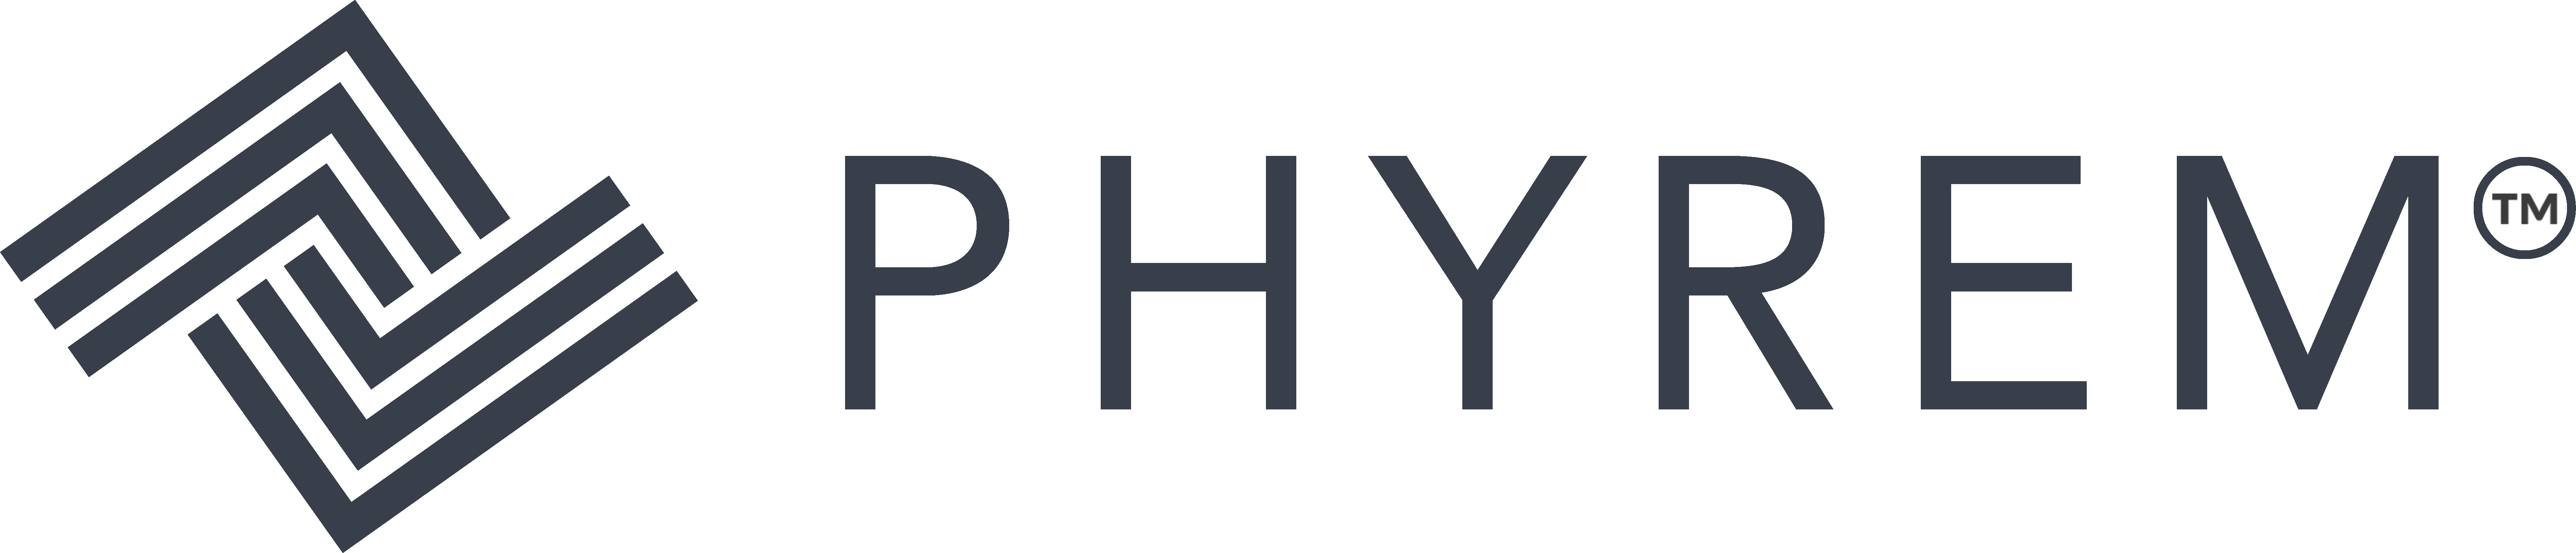 Phyrem - Self Storage Technology